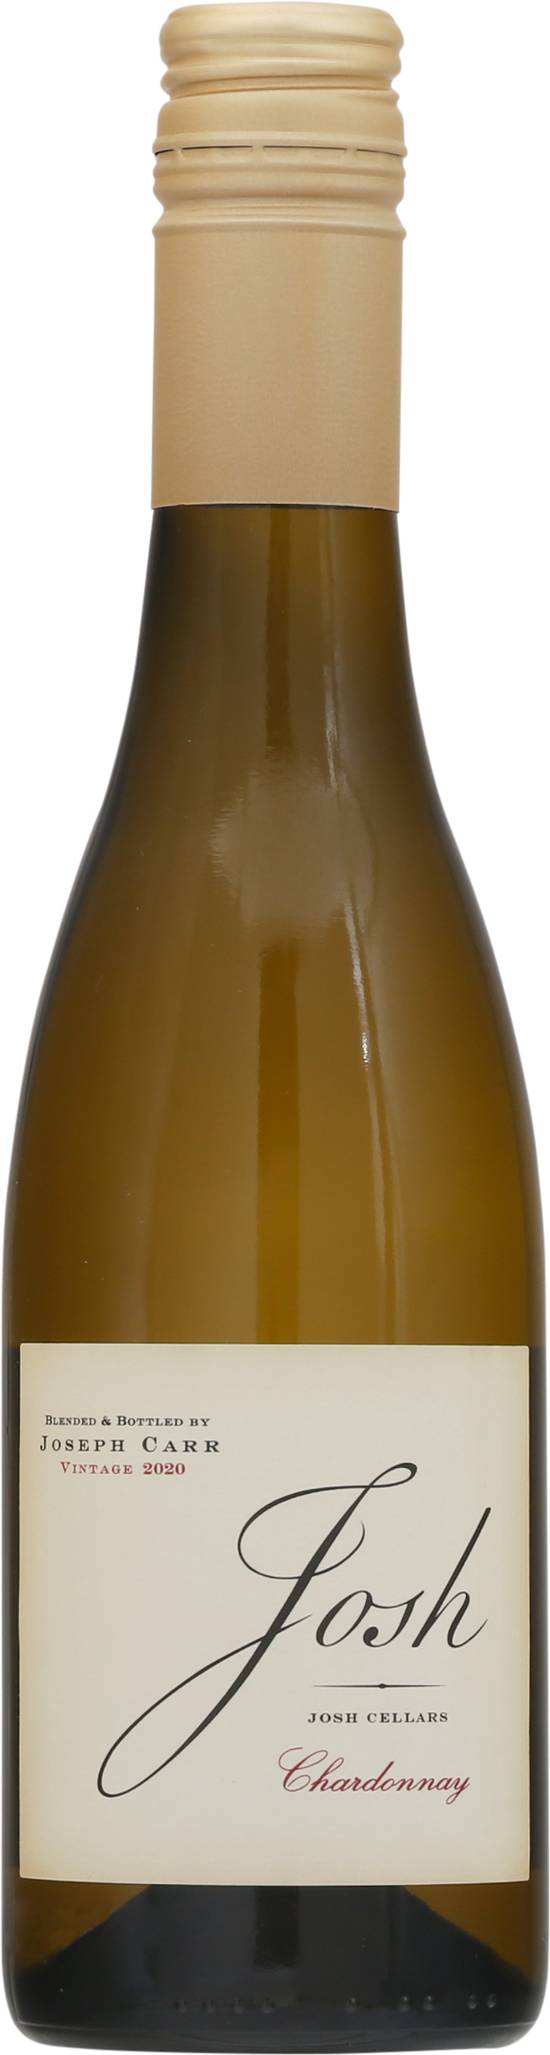 Josh Cellars California Chardonnay Wine 2020 (375 ml)